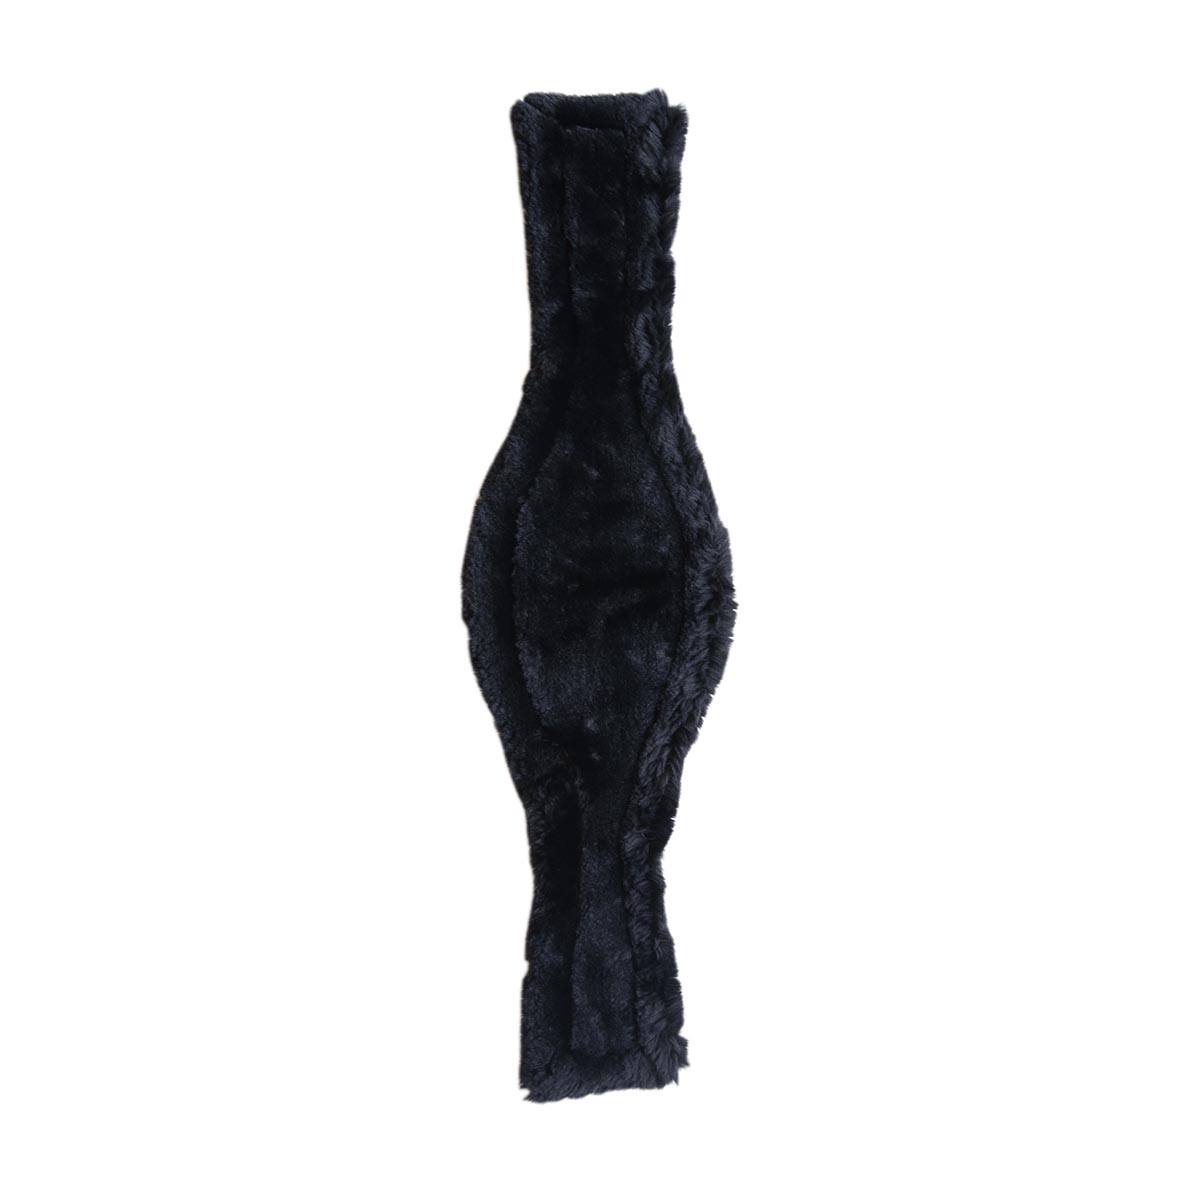 Singelhoes Kentucky Anatomic Zwart, 115 CM in zwart